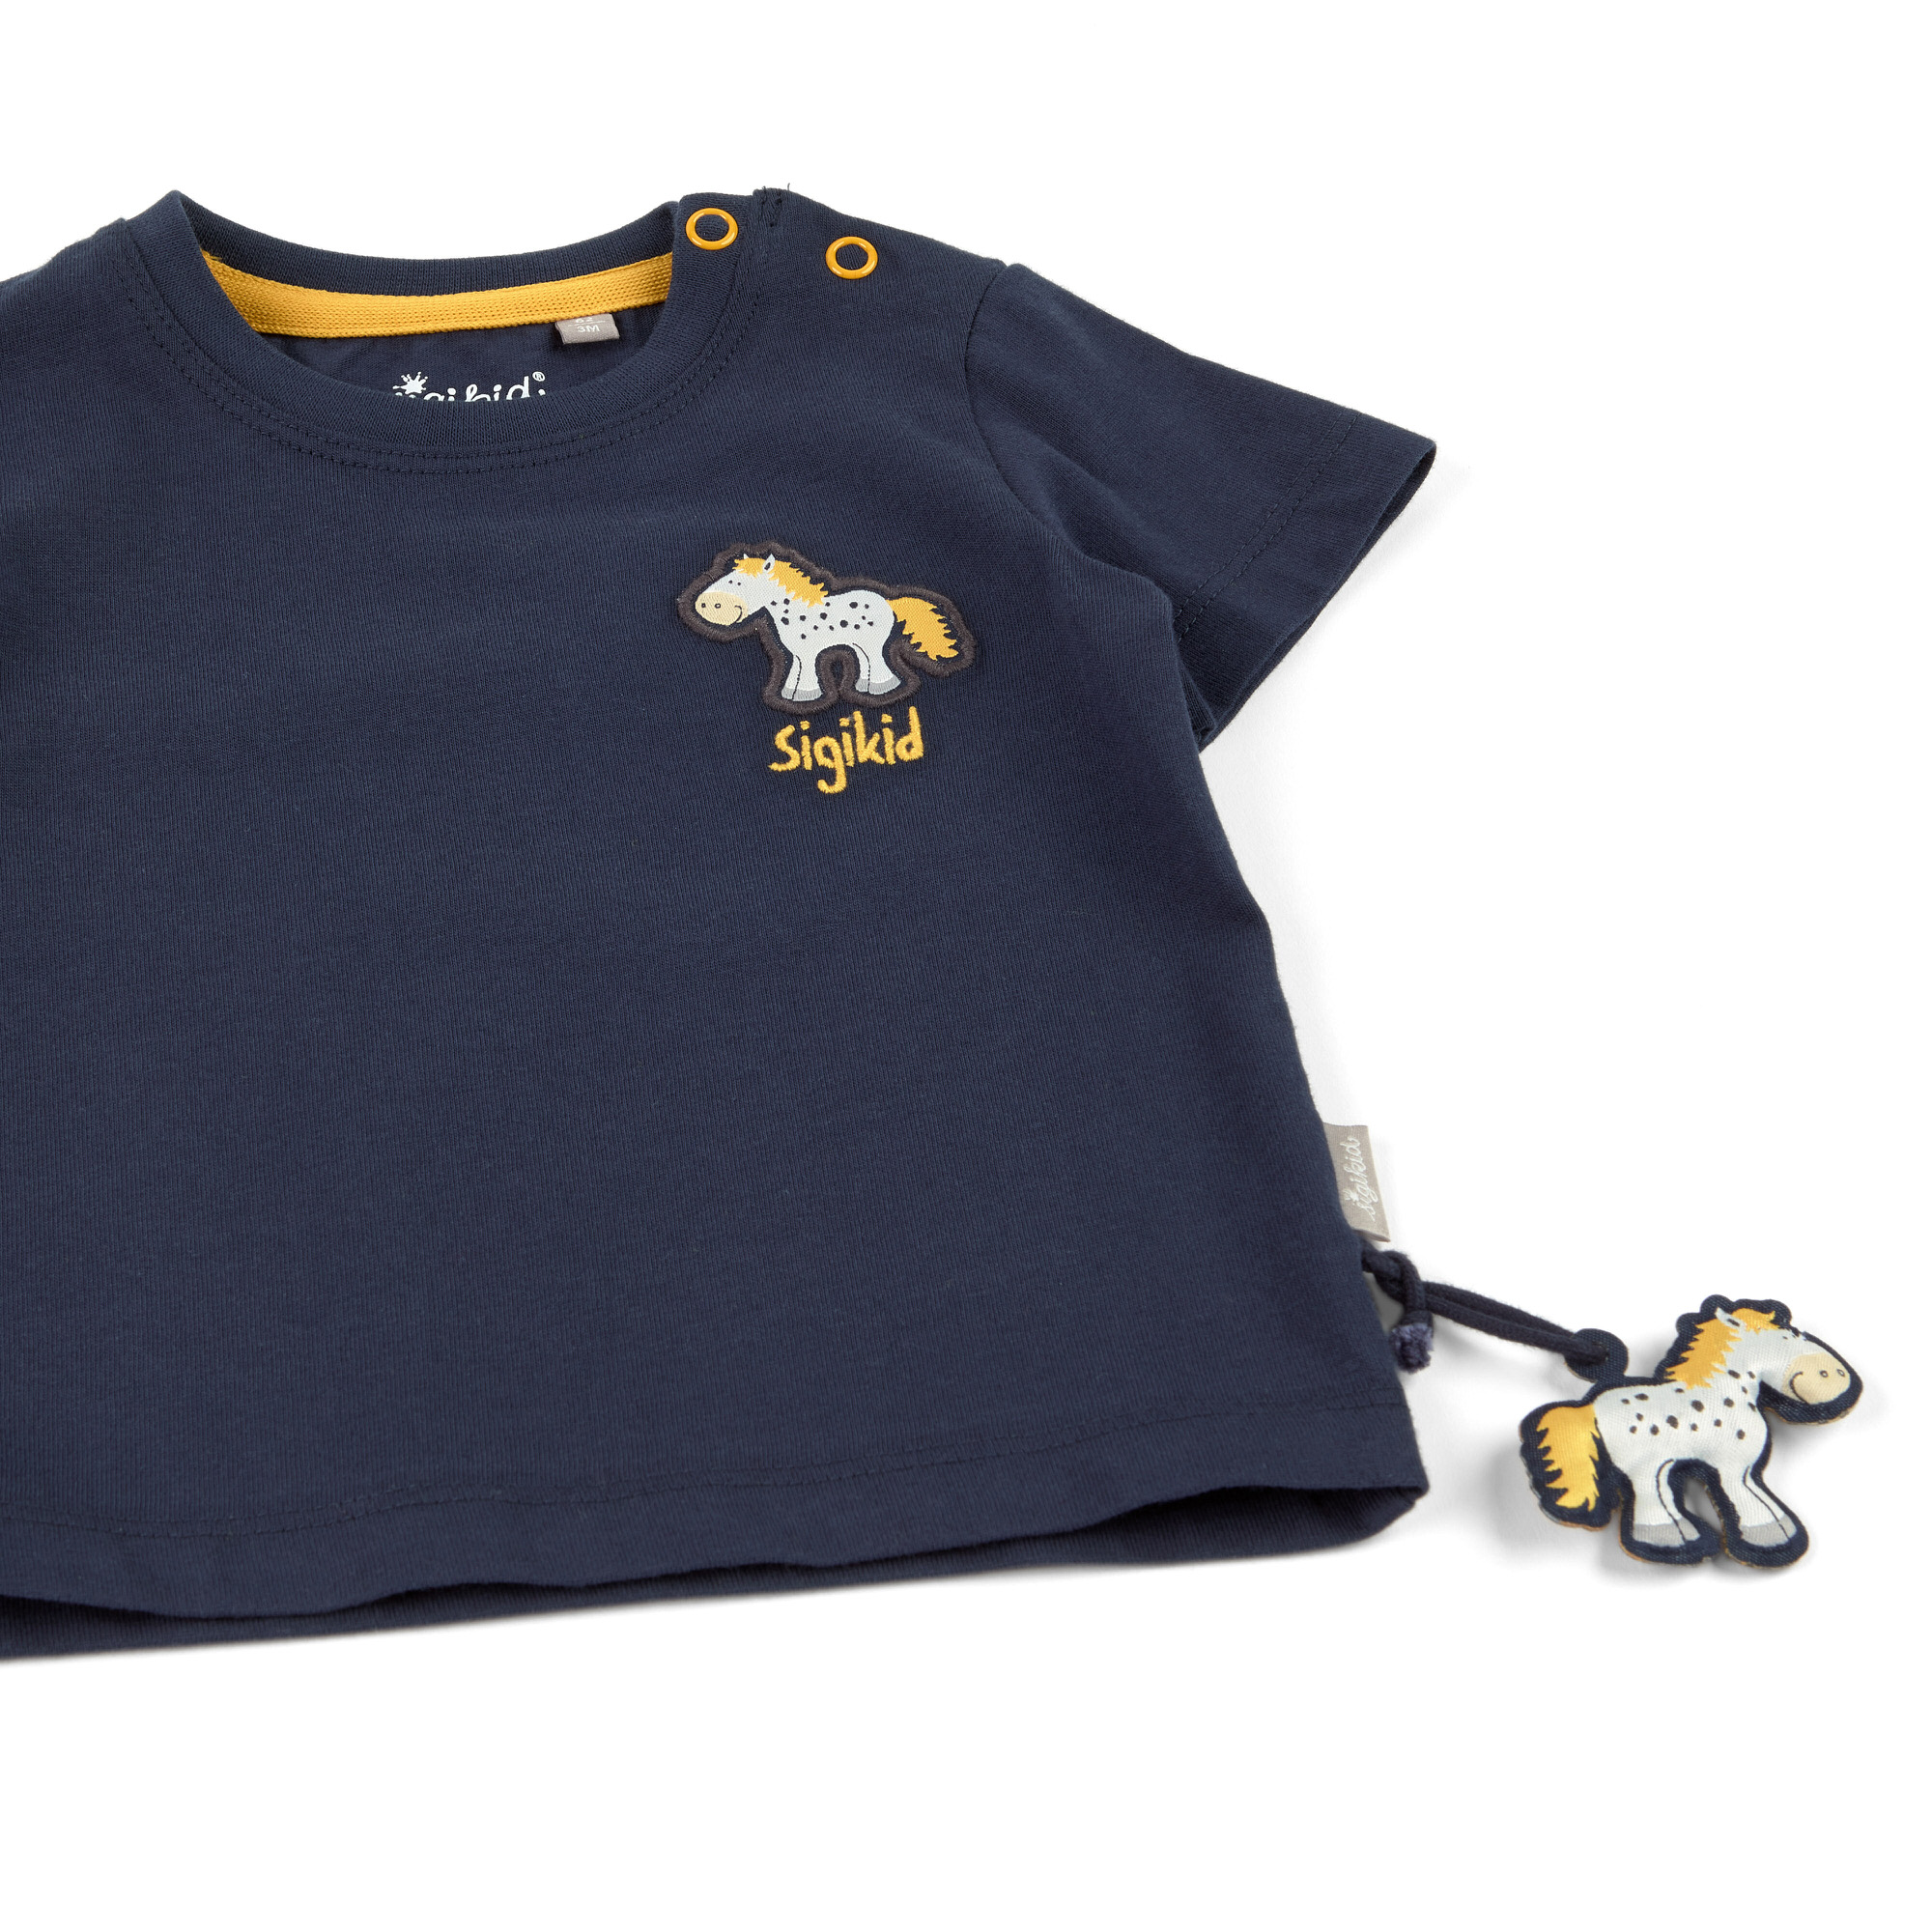 Dunkelblaues Baby T-Shirt mit Pony Motiv